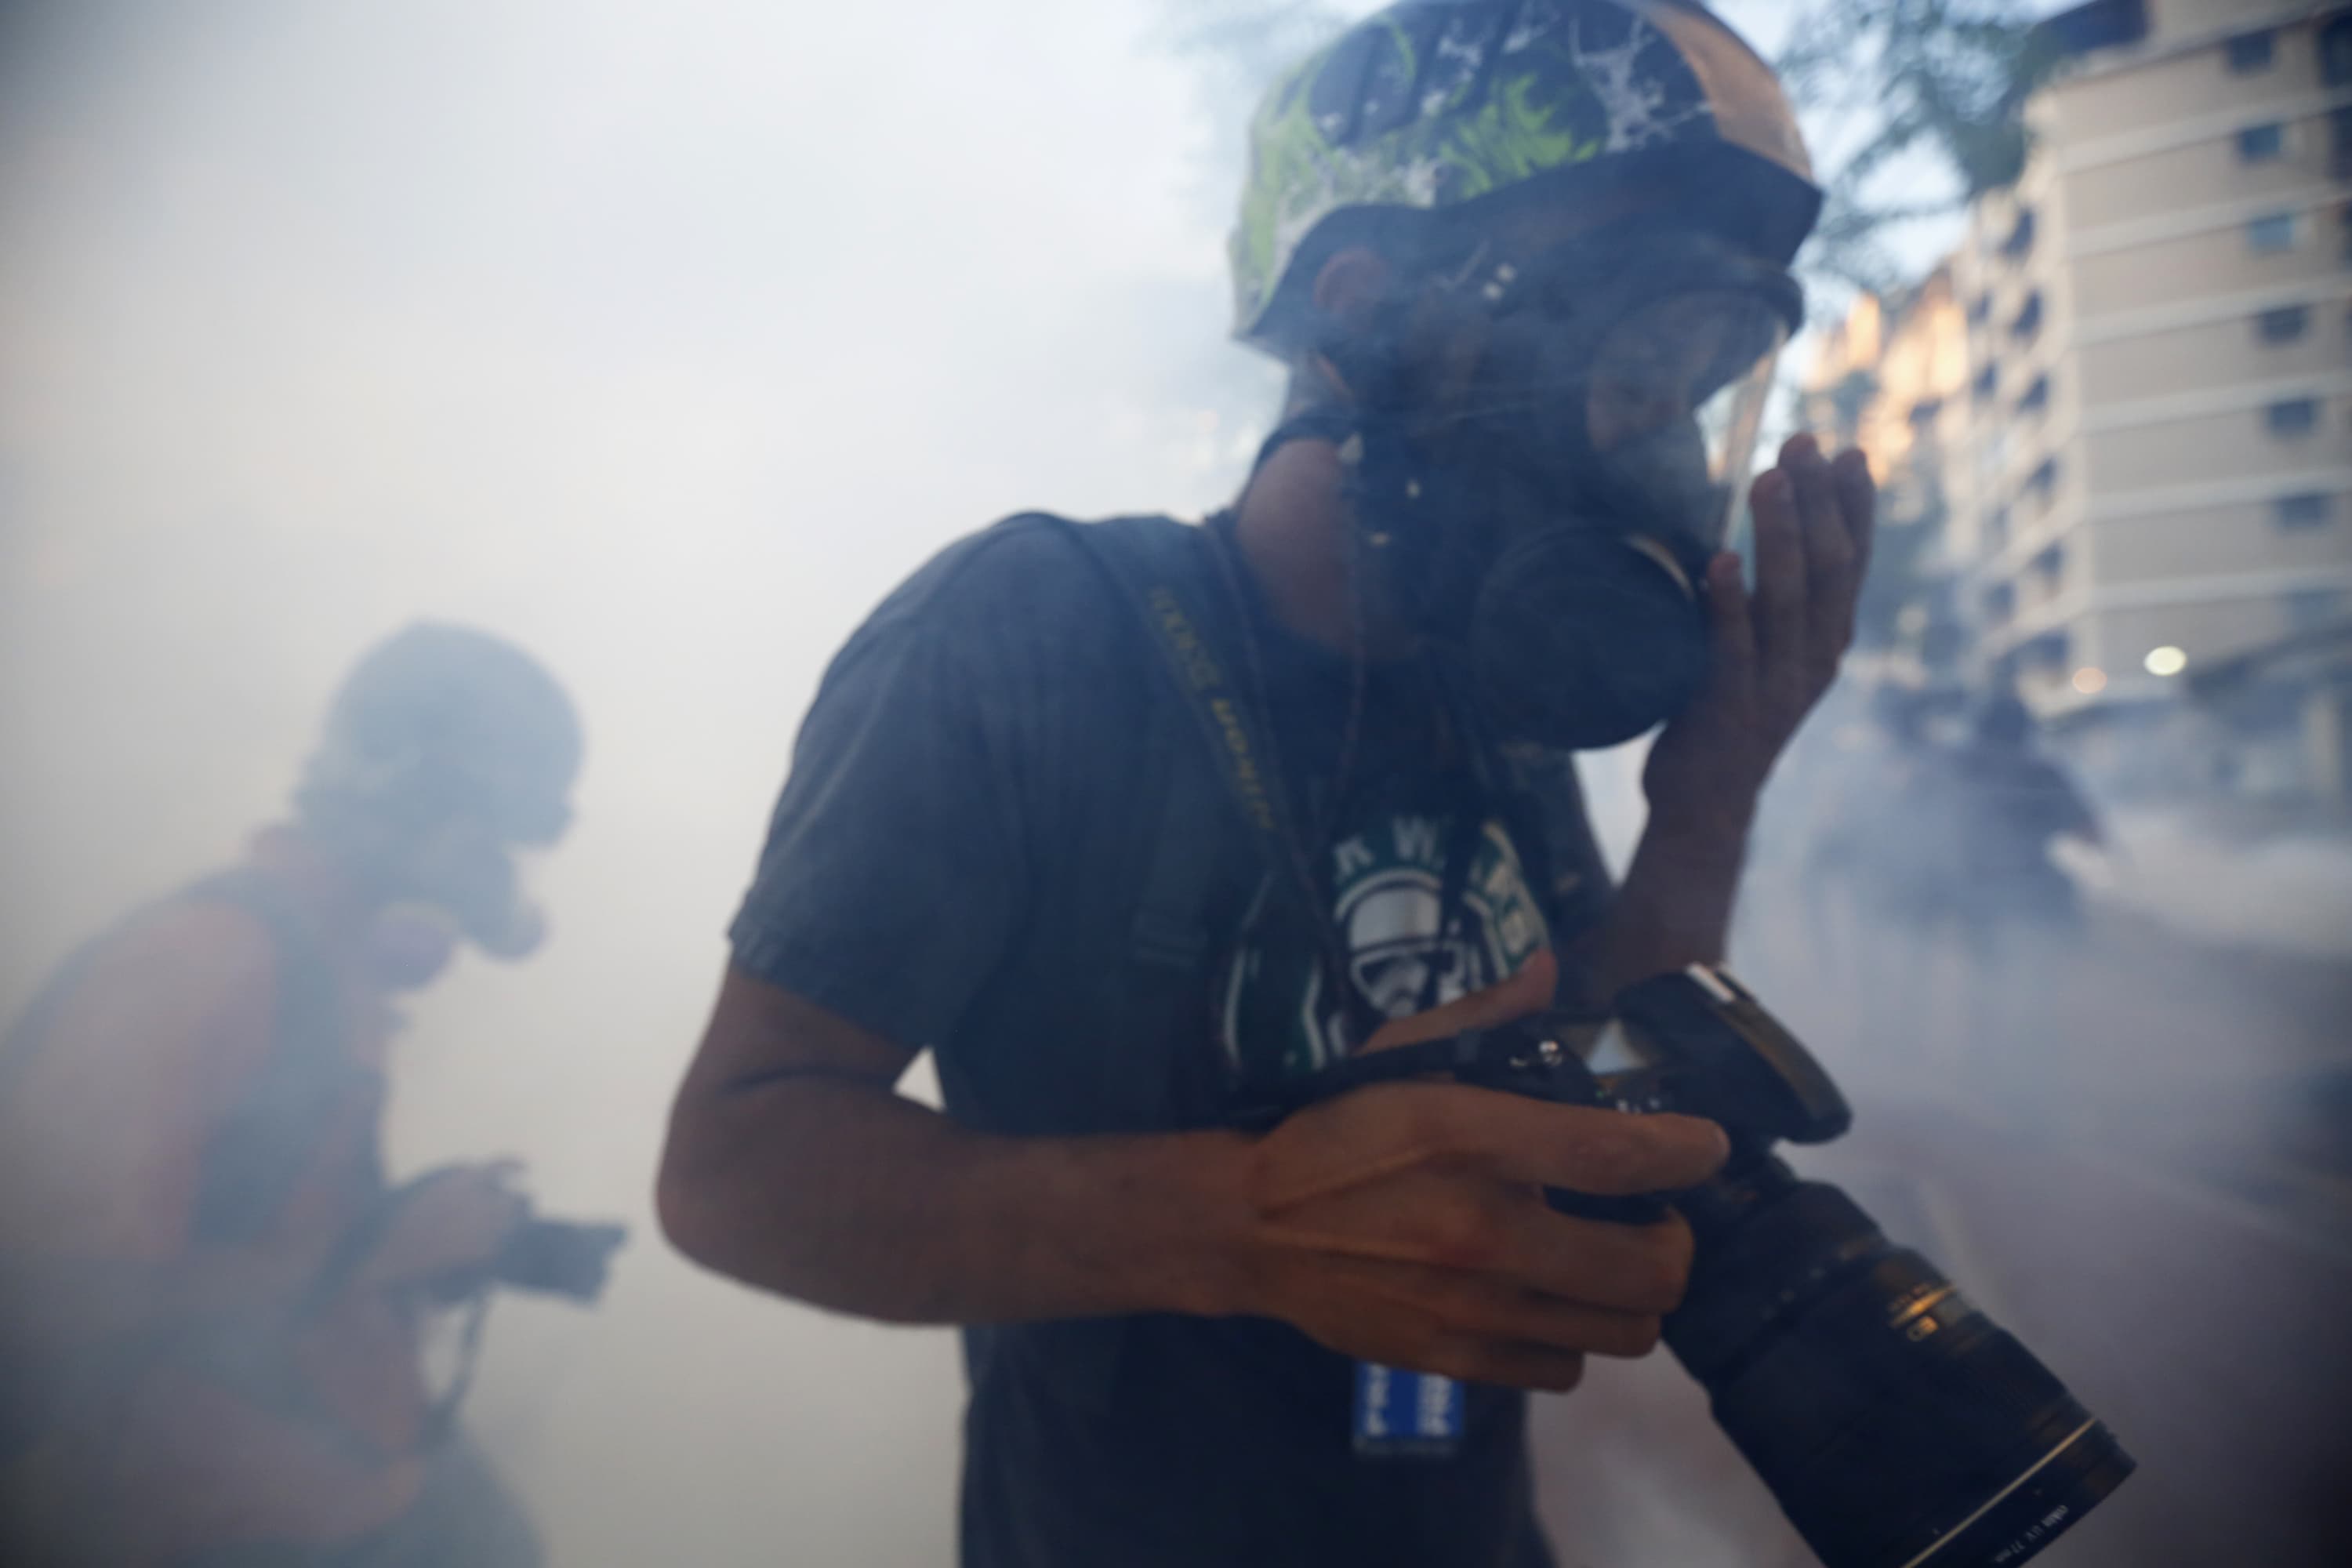 Photographers walk through tear gas during an anti-government protest in Caracas, Venezuela, 2 March 2014, REUTERS/Jorge Silva